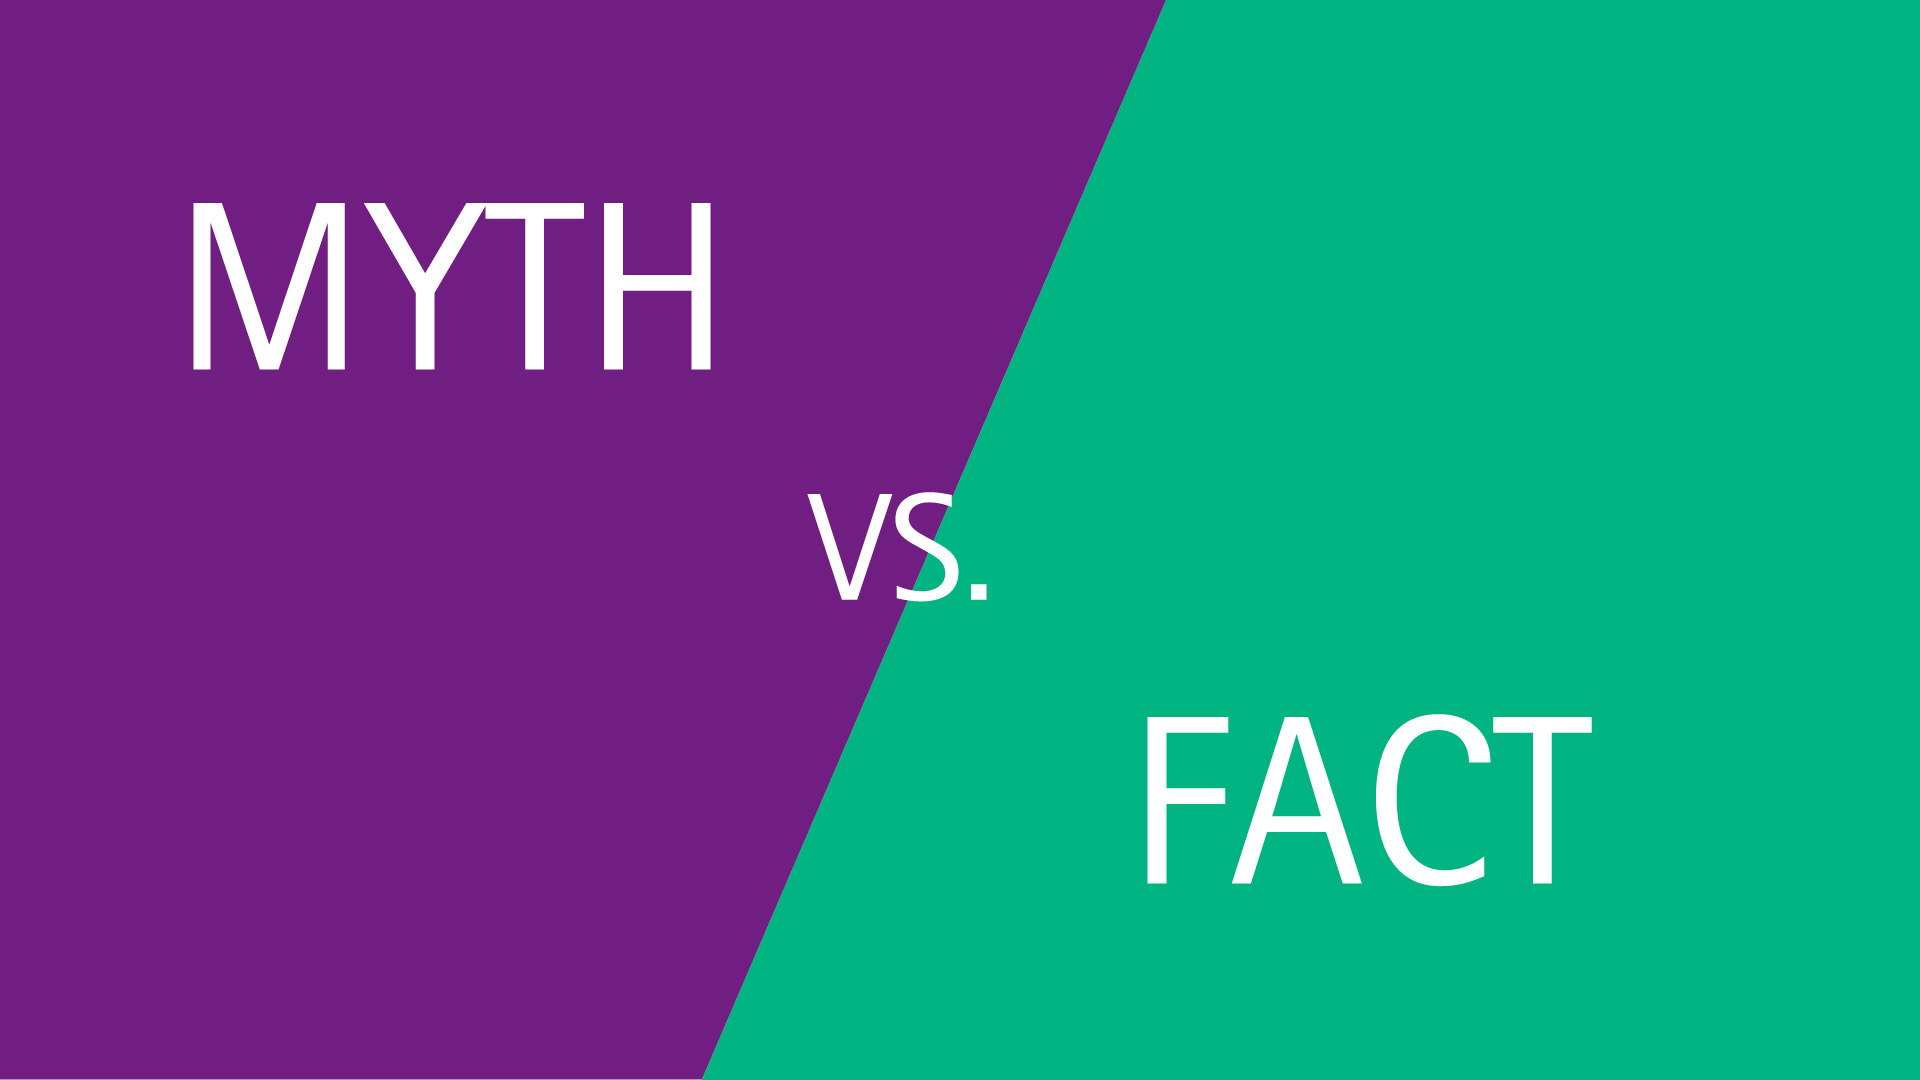 Myth versus fact graphic